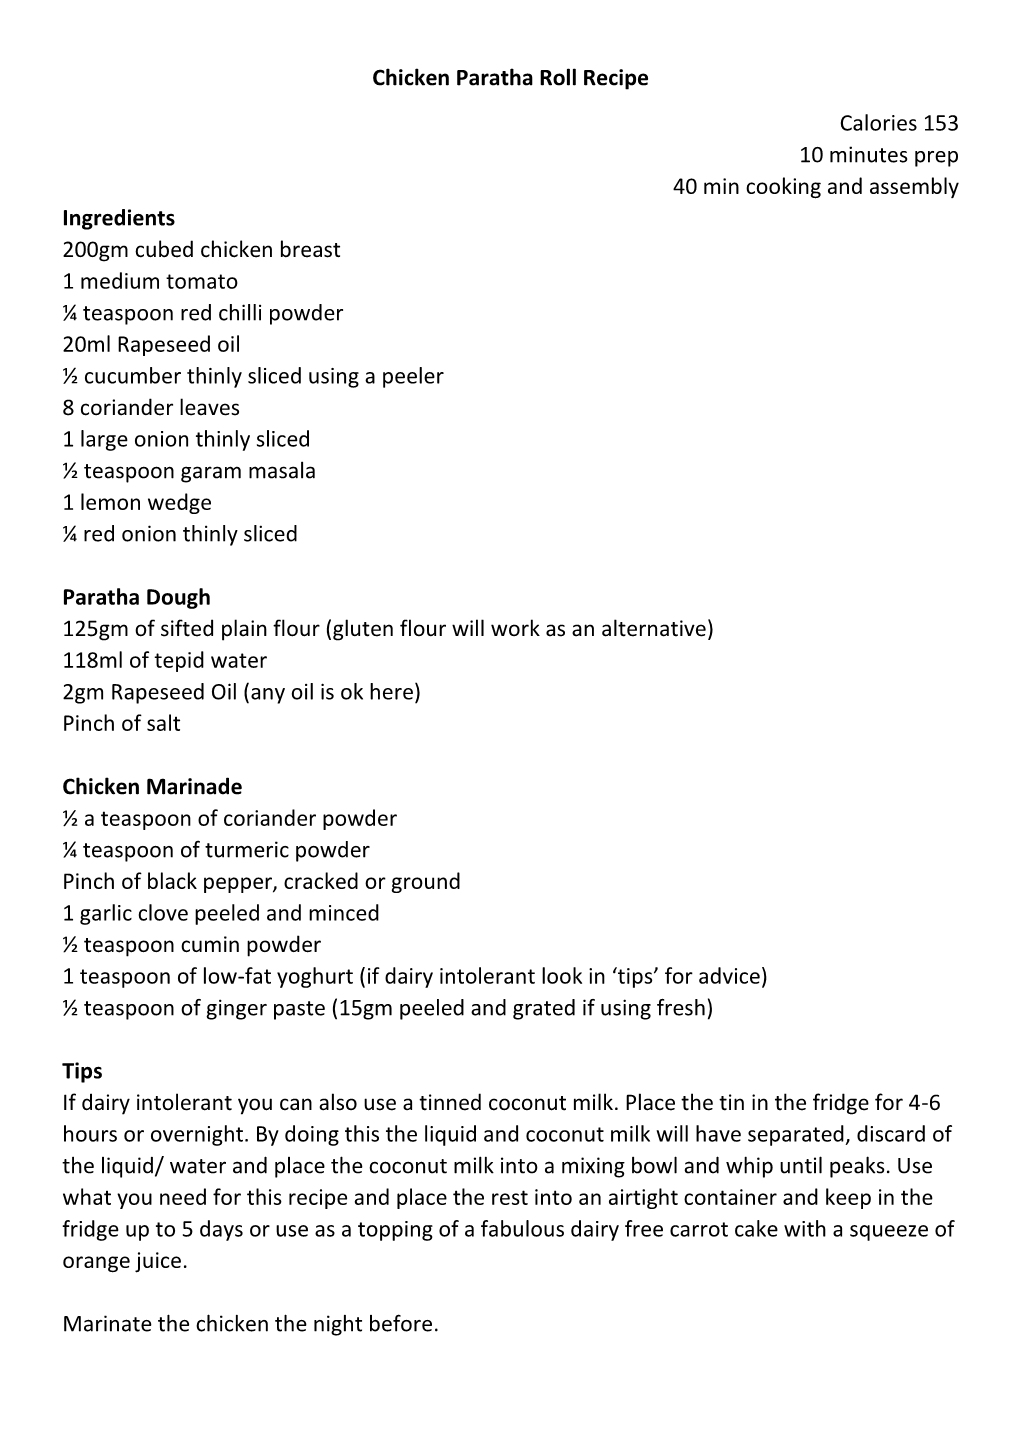 Chicken Paratha Roll Recipe Calories 153 10 Minutes Prep 40 Min